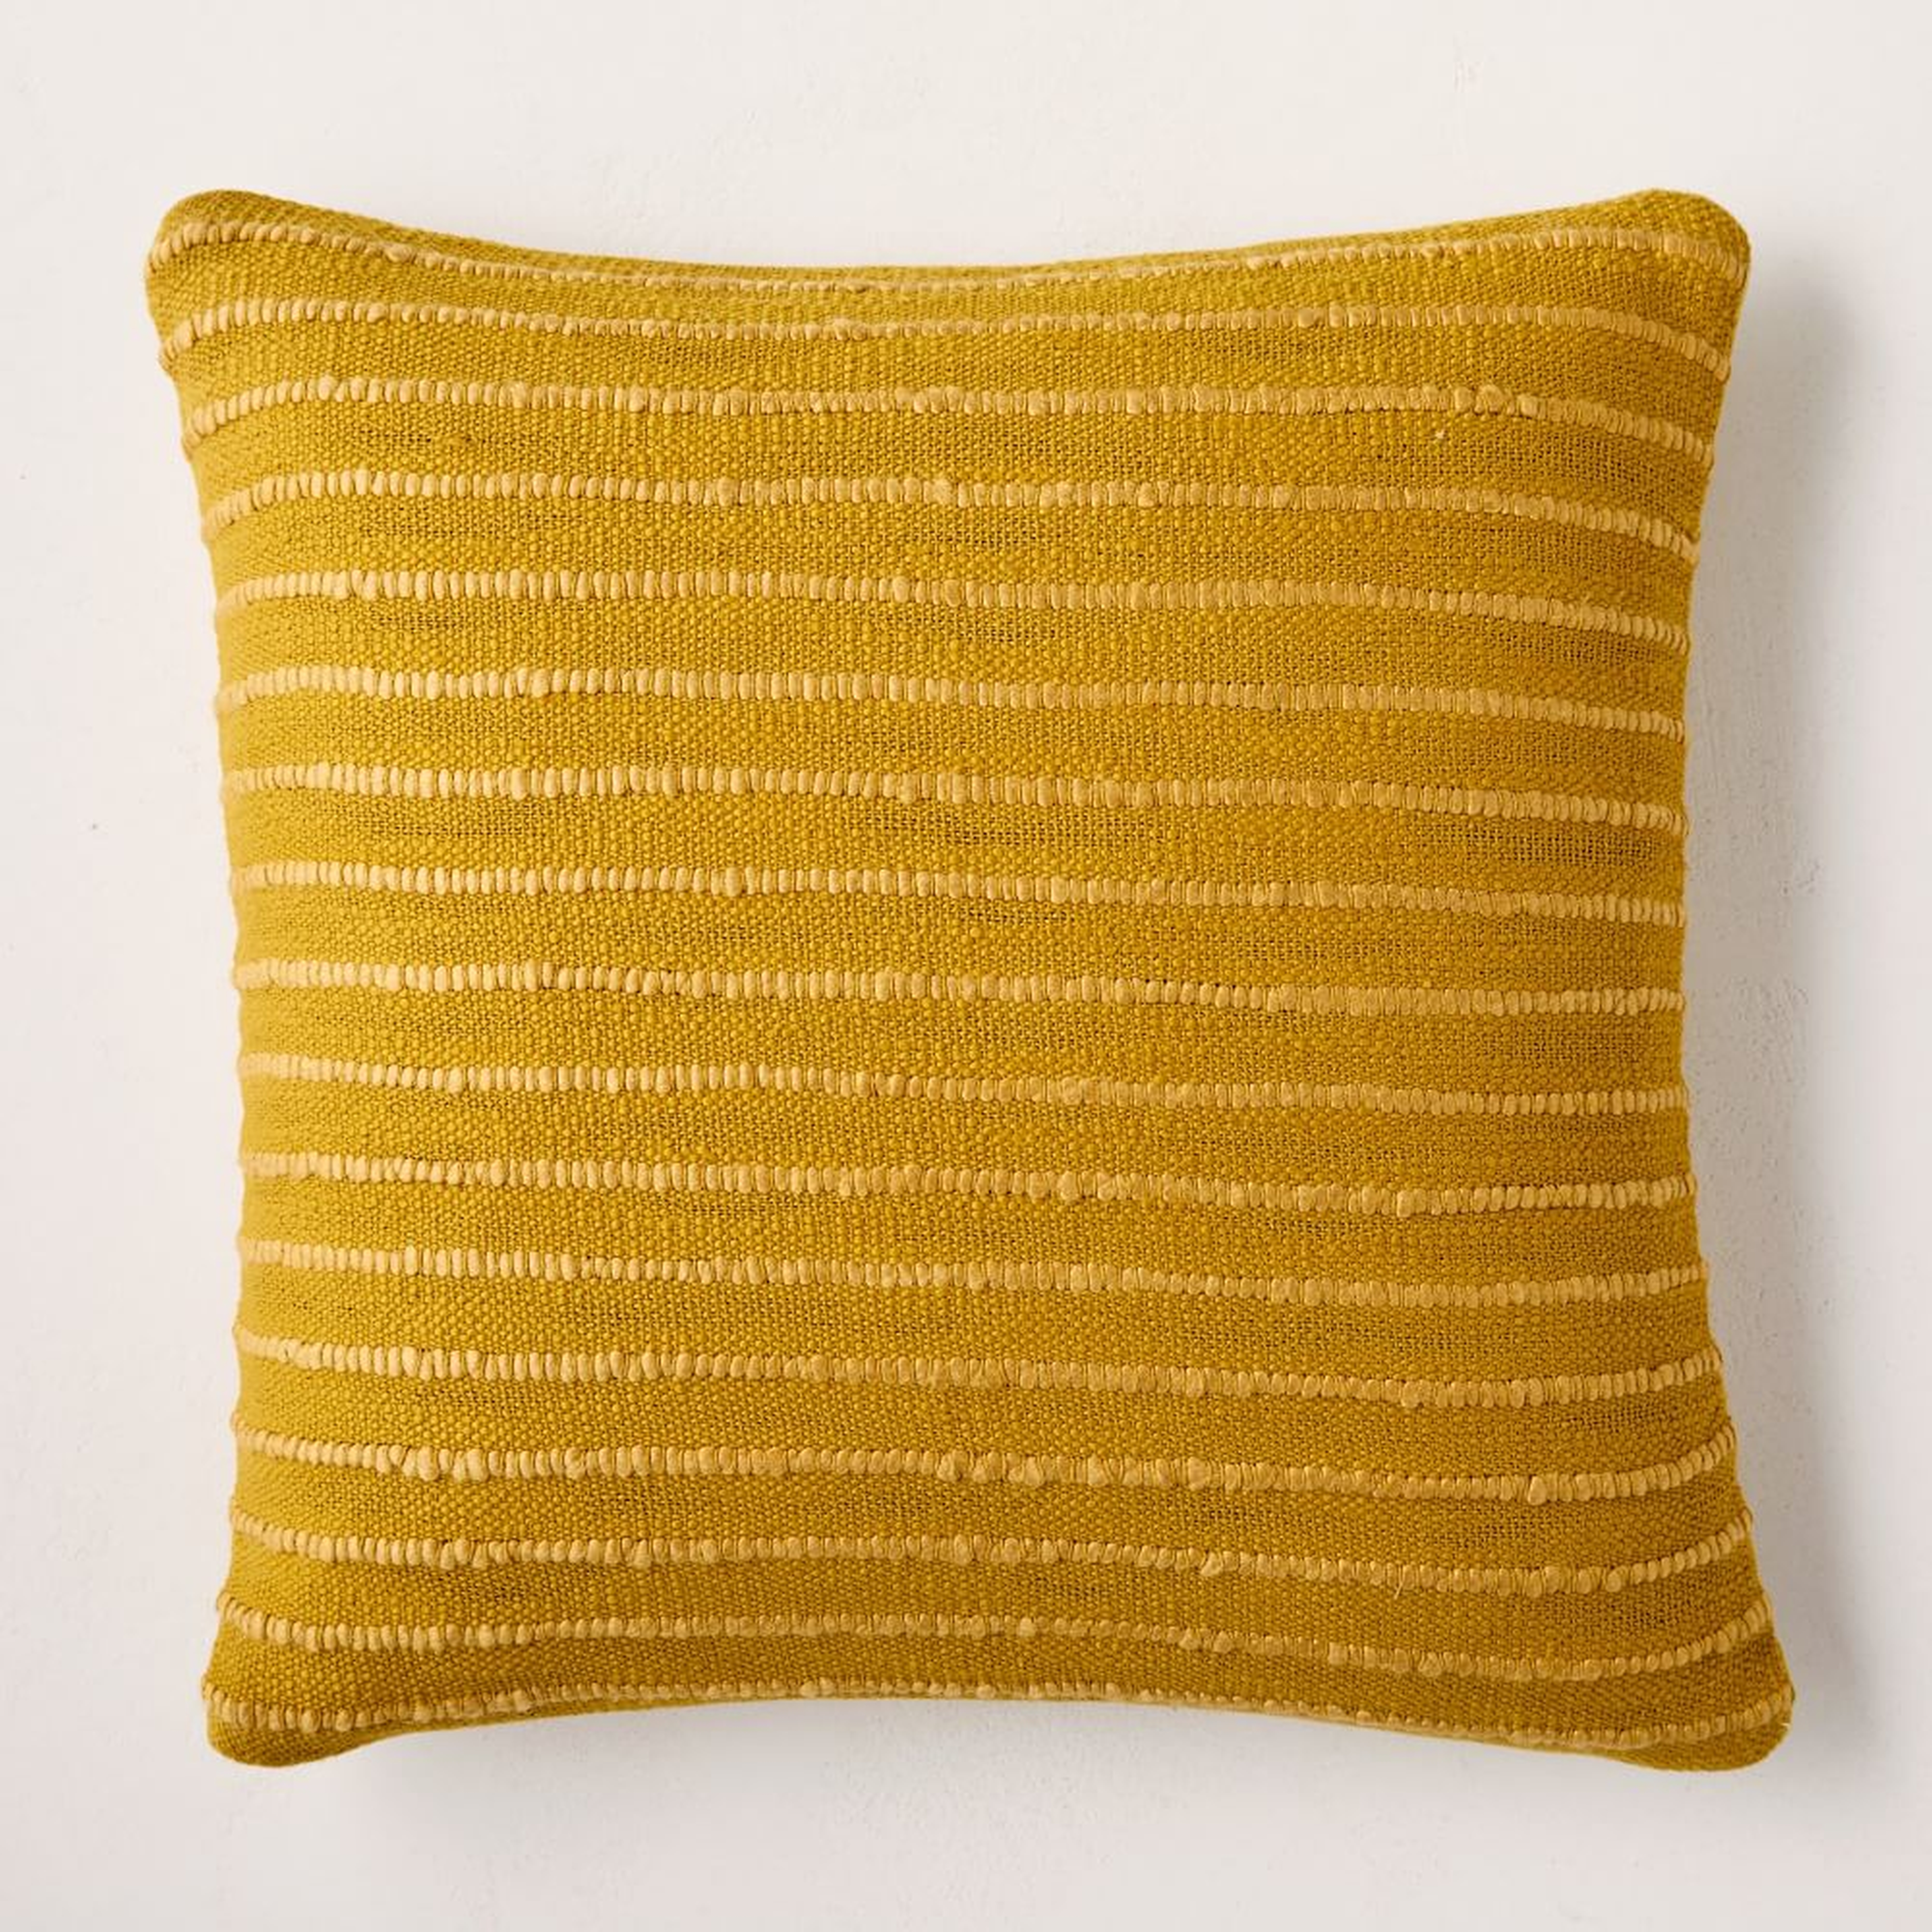 Soft Corded Pillow Cover, 20"x20", Dark Horseradish - West Elm